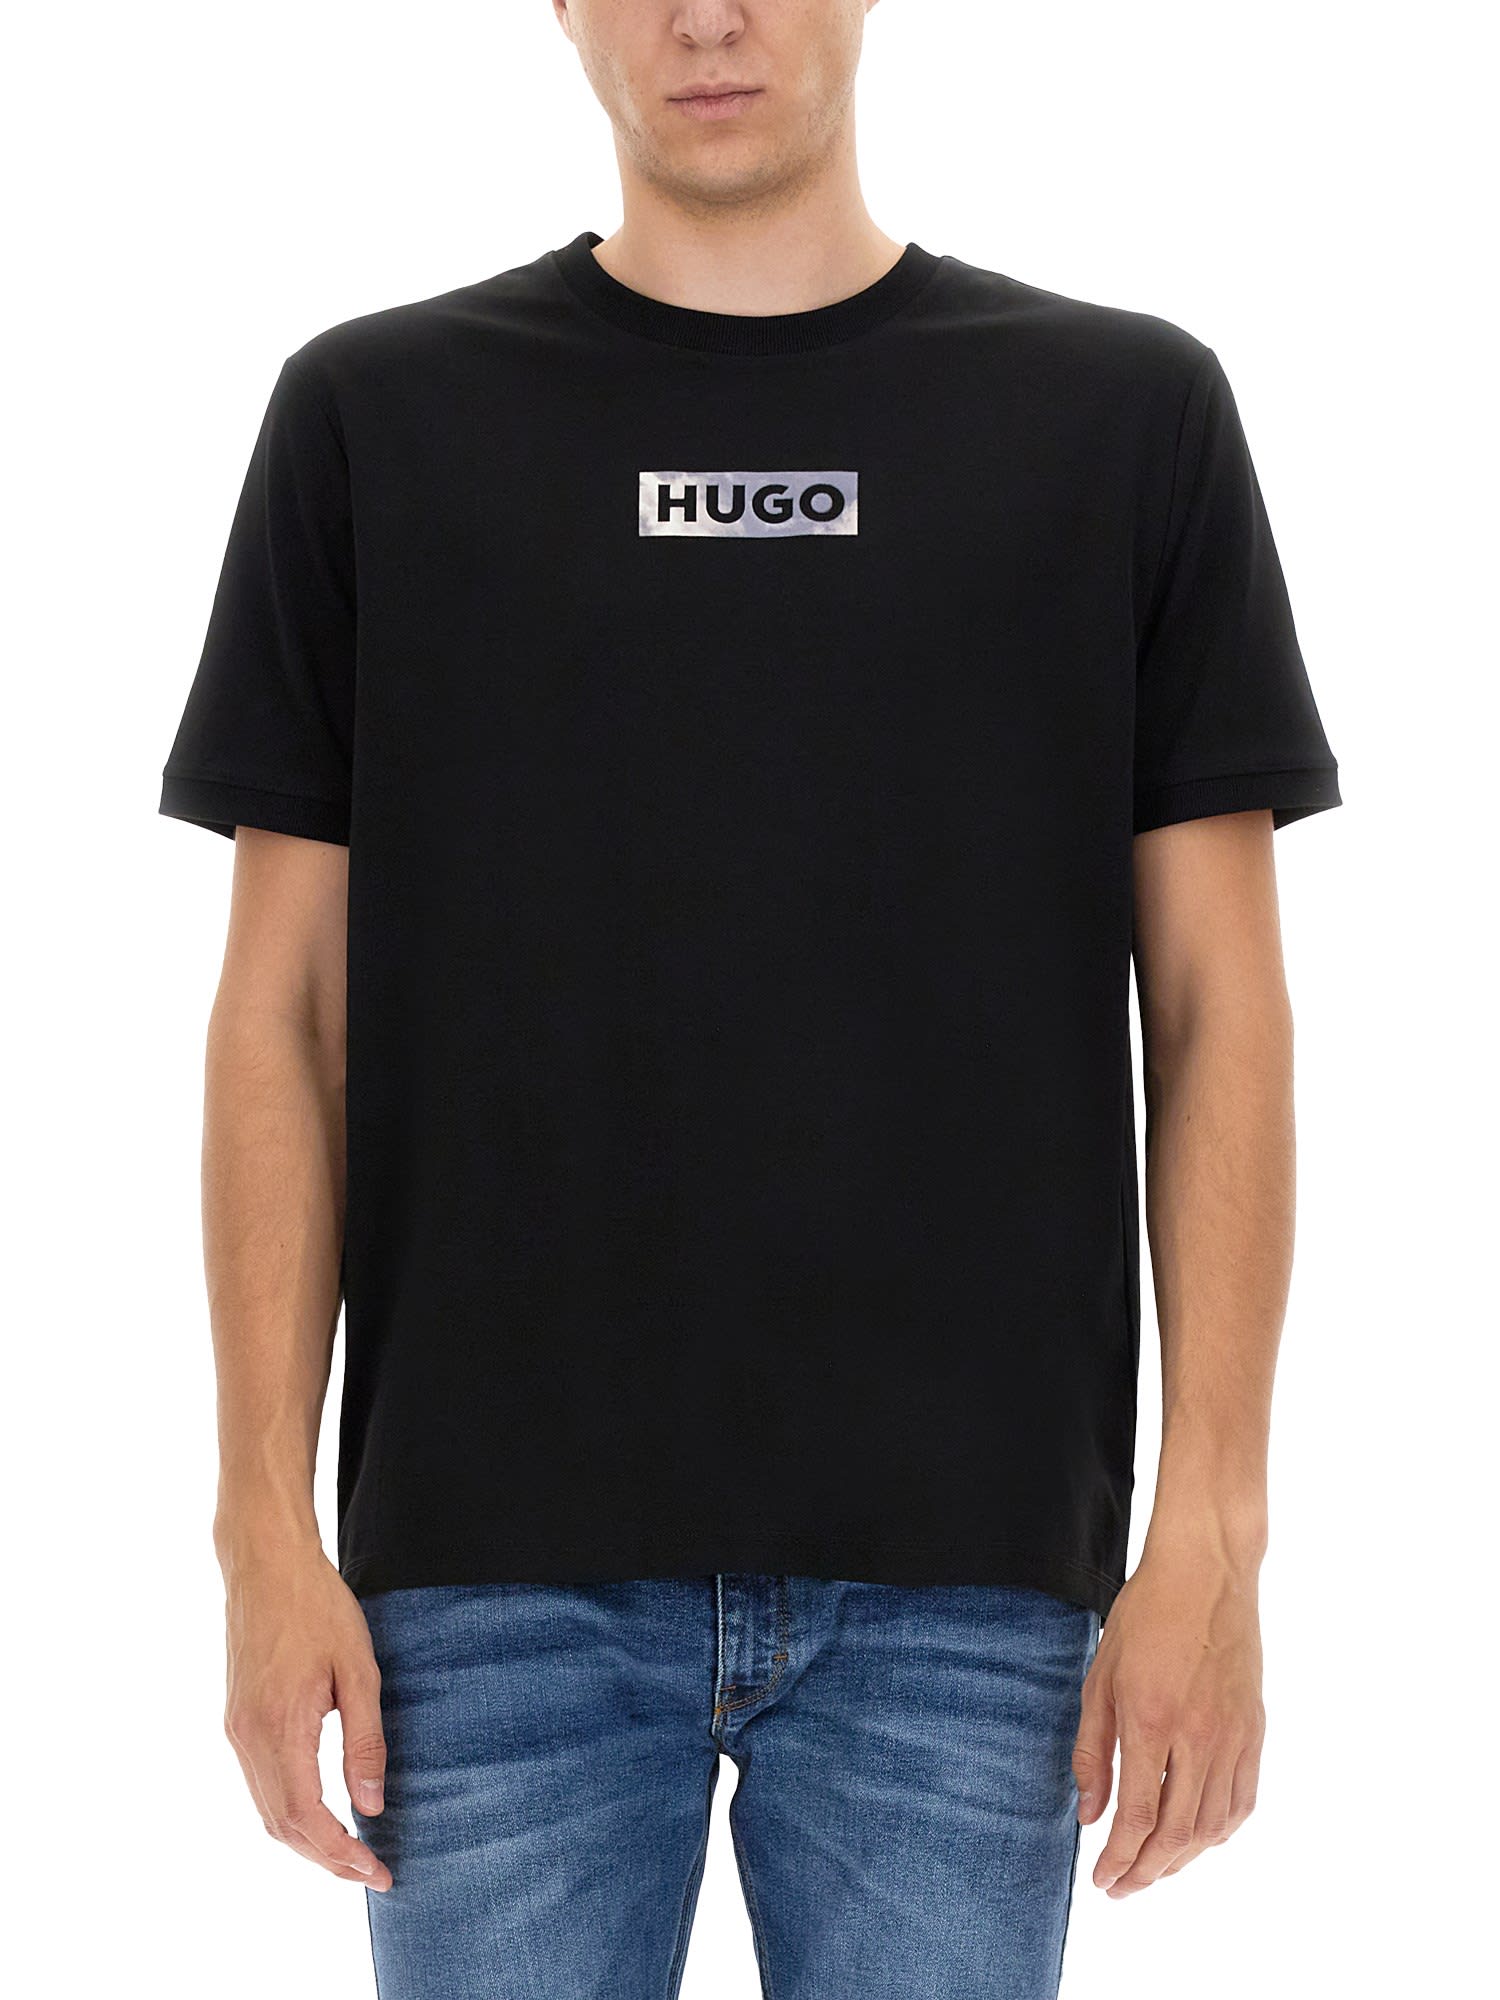 Hugo Boss T-shirt Boss X Alexey Kondakov